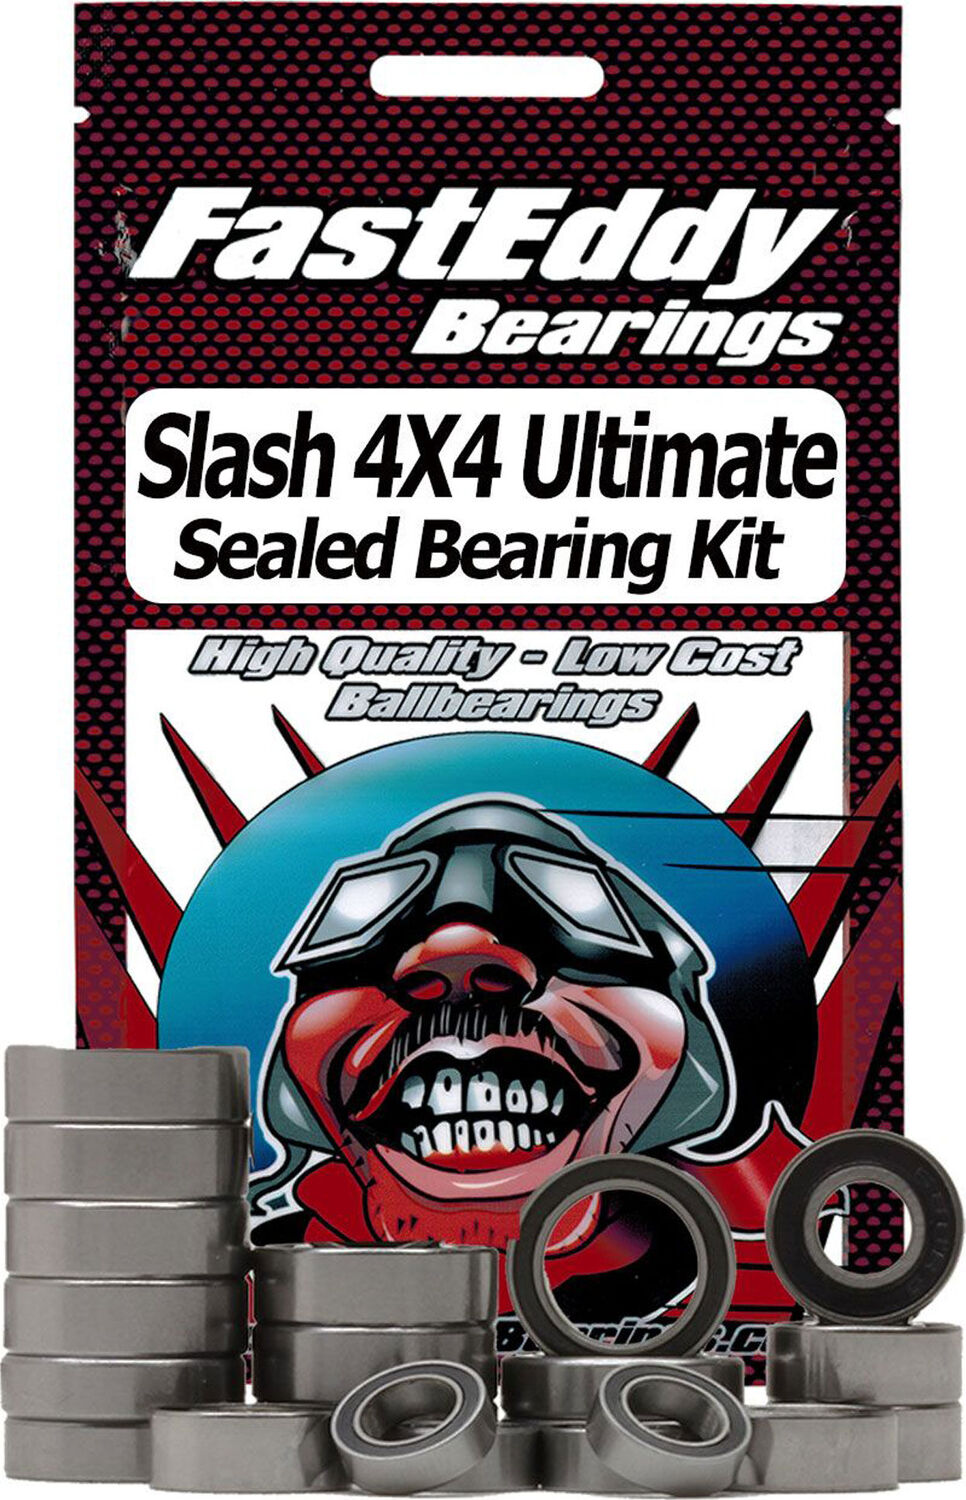 Sealed Bearing Kit: Traxxas Slash 4X4 Ultimate